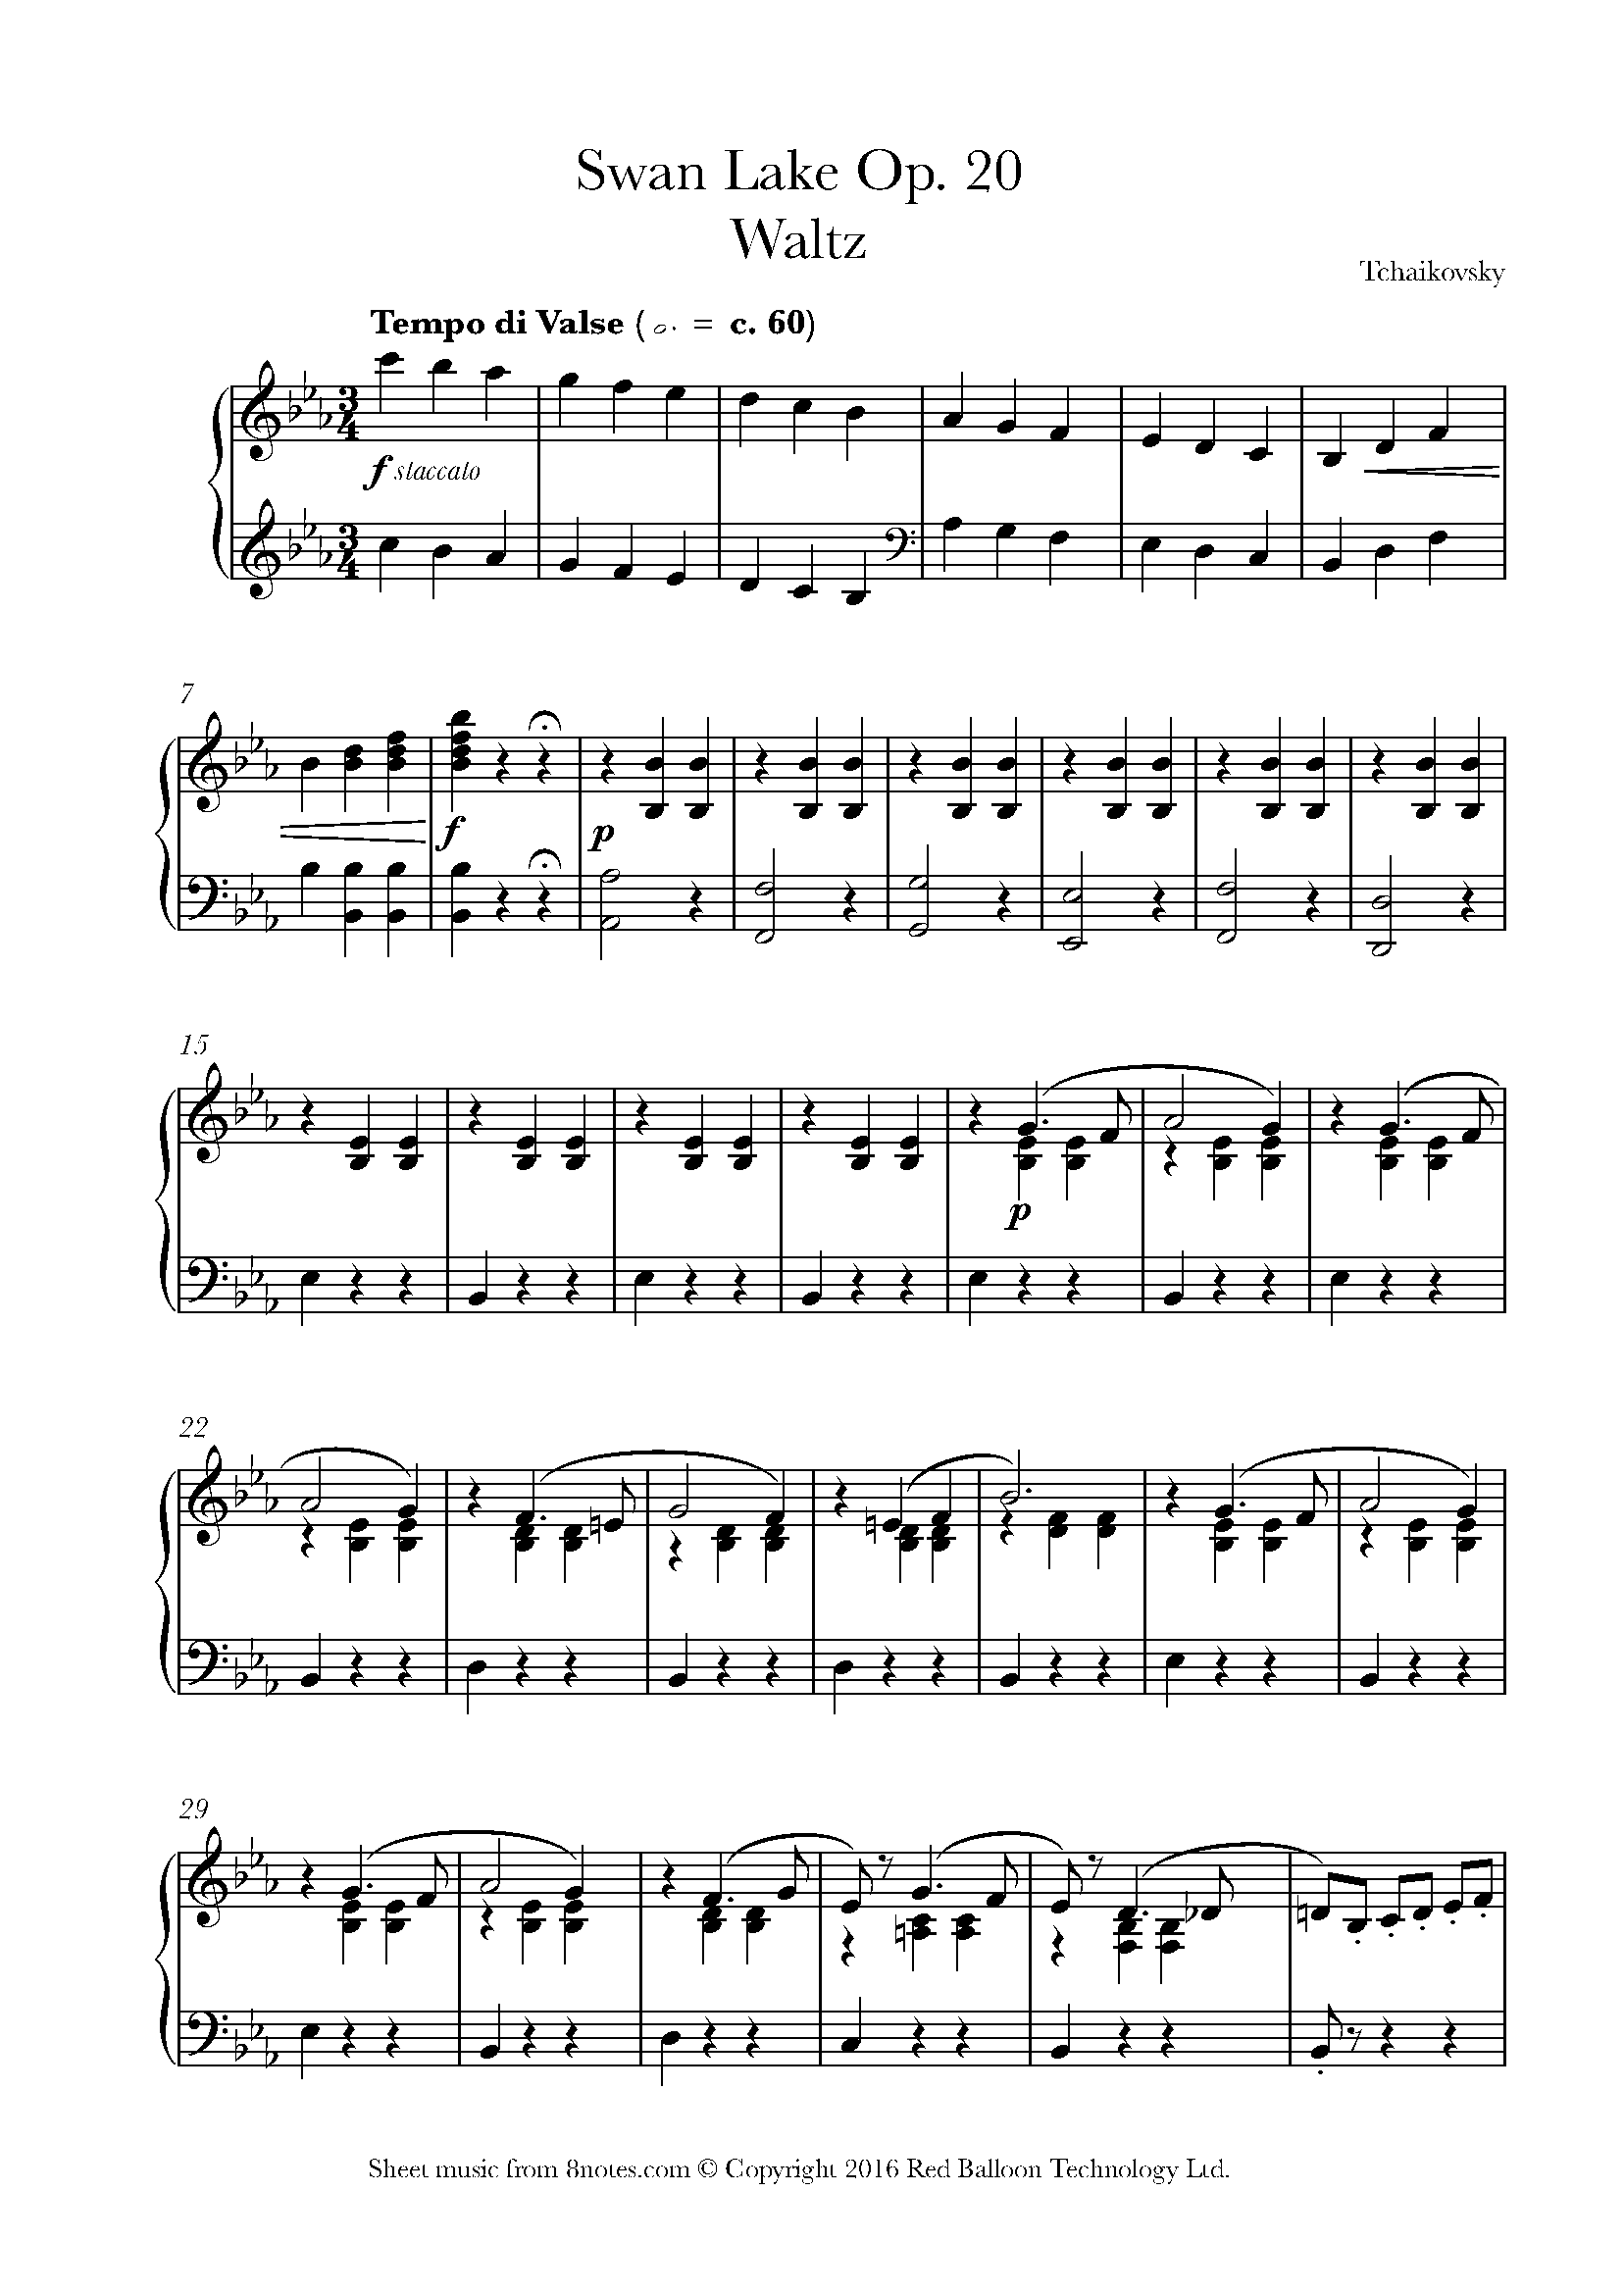 Tchaikovsky - Swan Lake Op. 20 Waltz Sheet music for Piano - 8notes.com